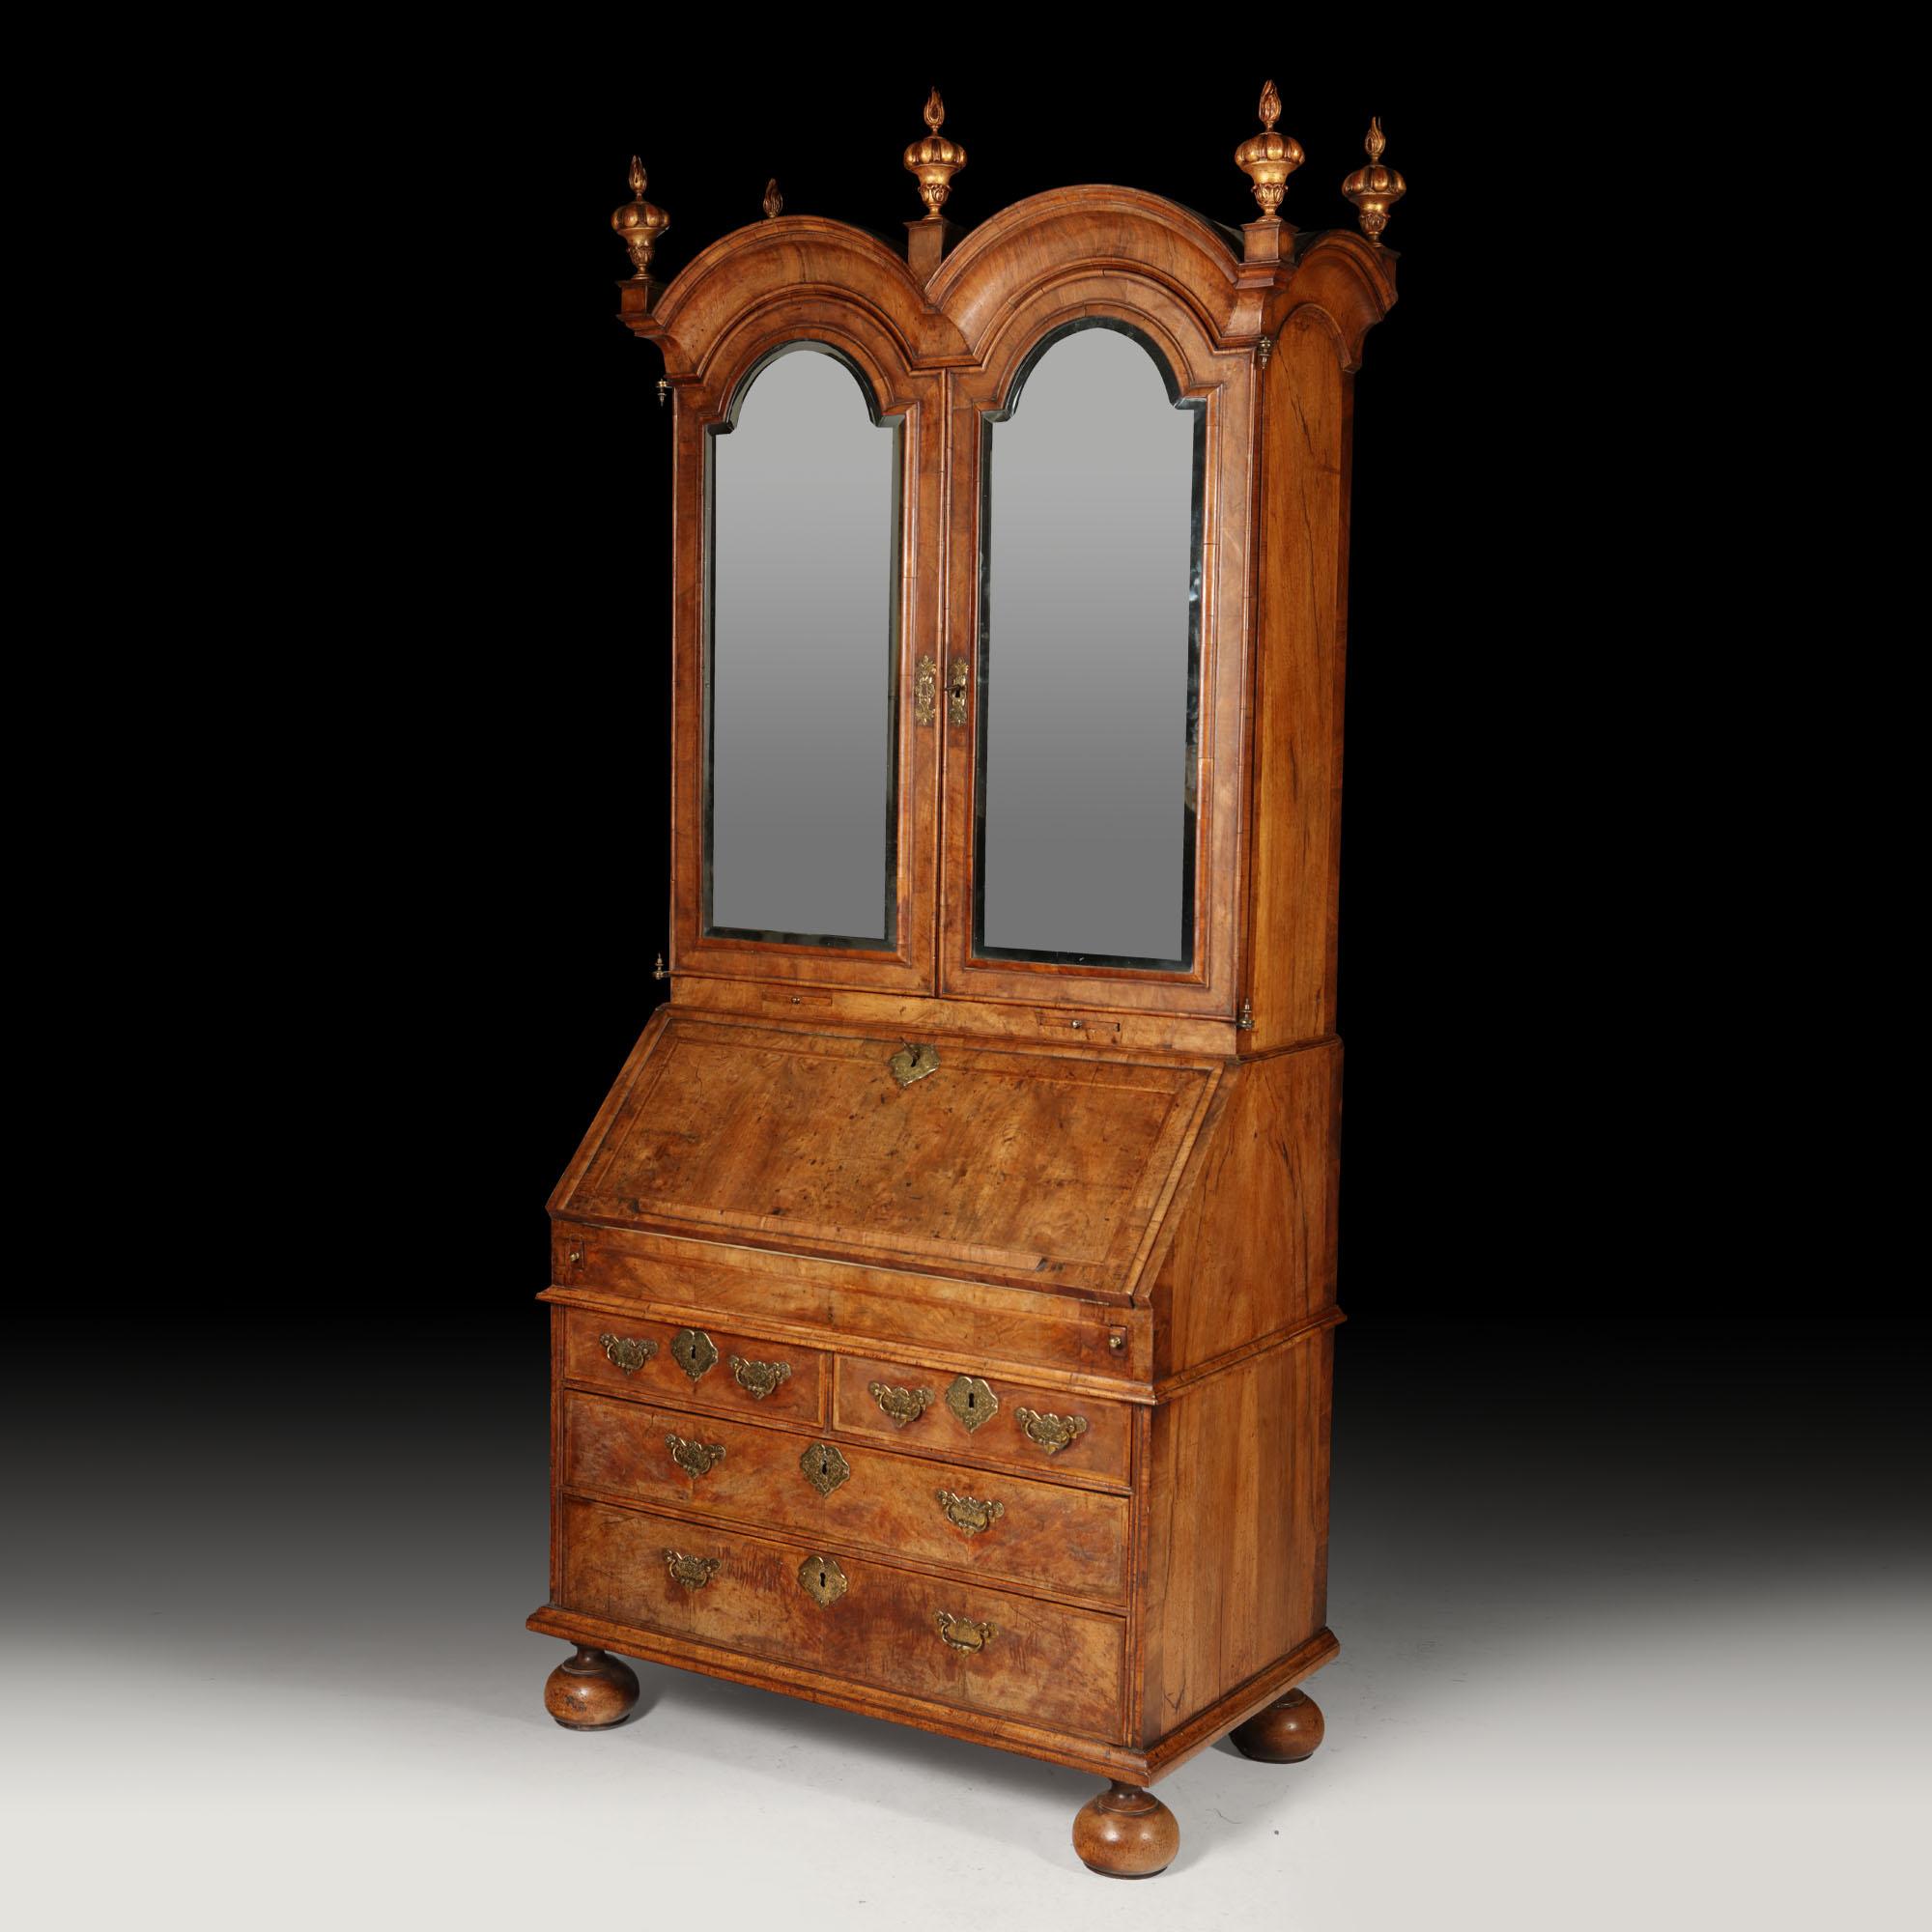 English 18th Century Queen Anne Figured Walnut Double Dome Bureau Bookcase